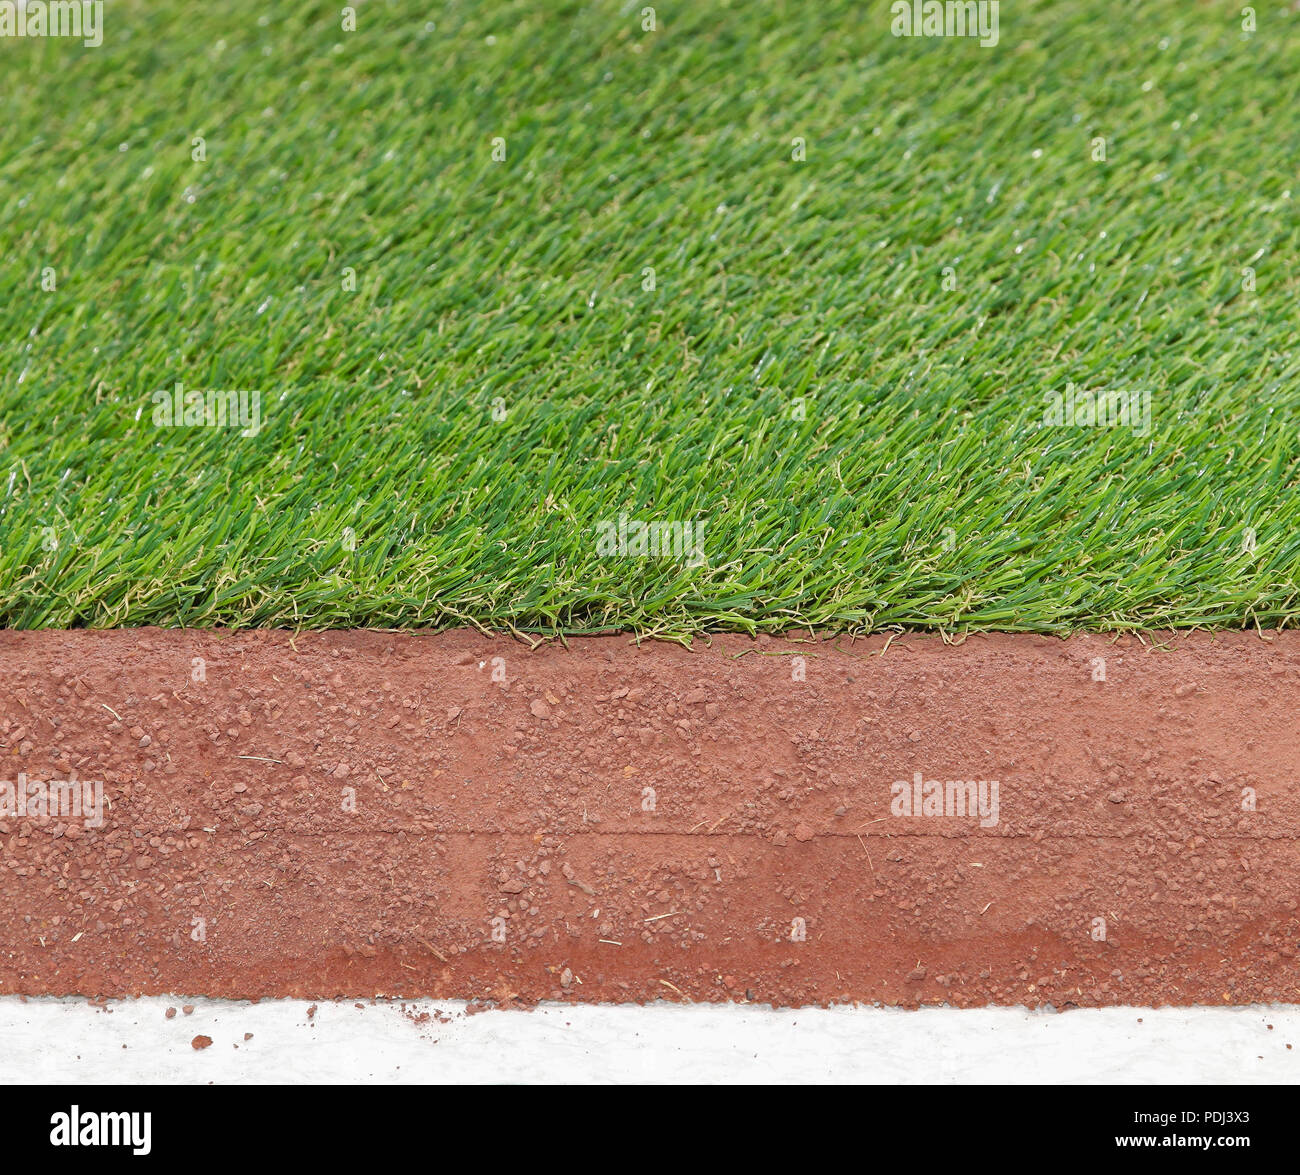 Strati di artificiale di erba sintetica per campi sportivi Foto stock -  Alamy